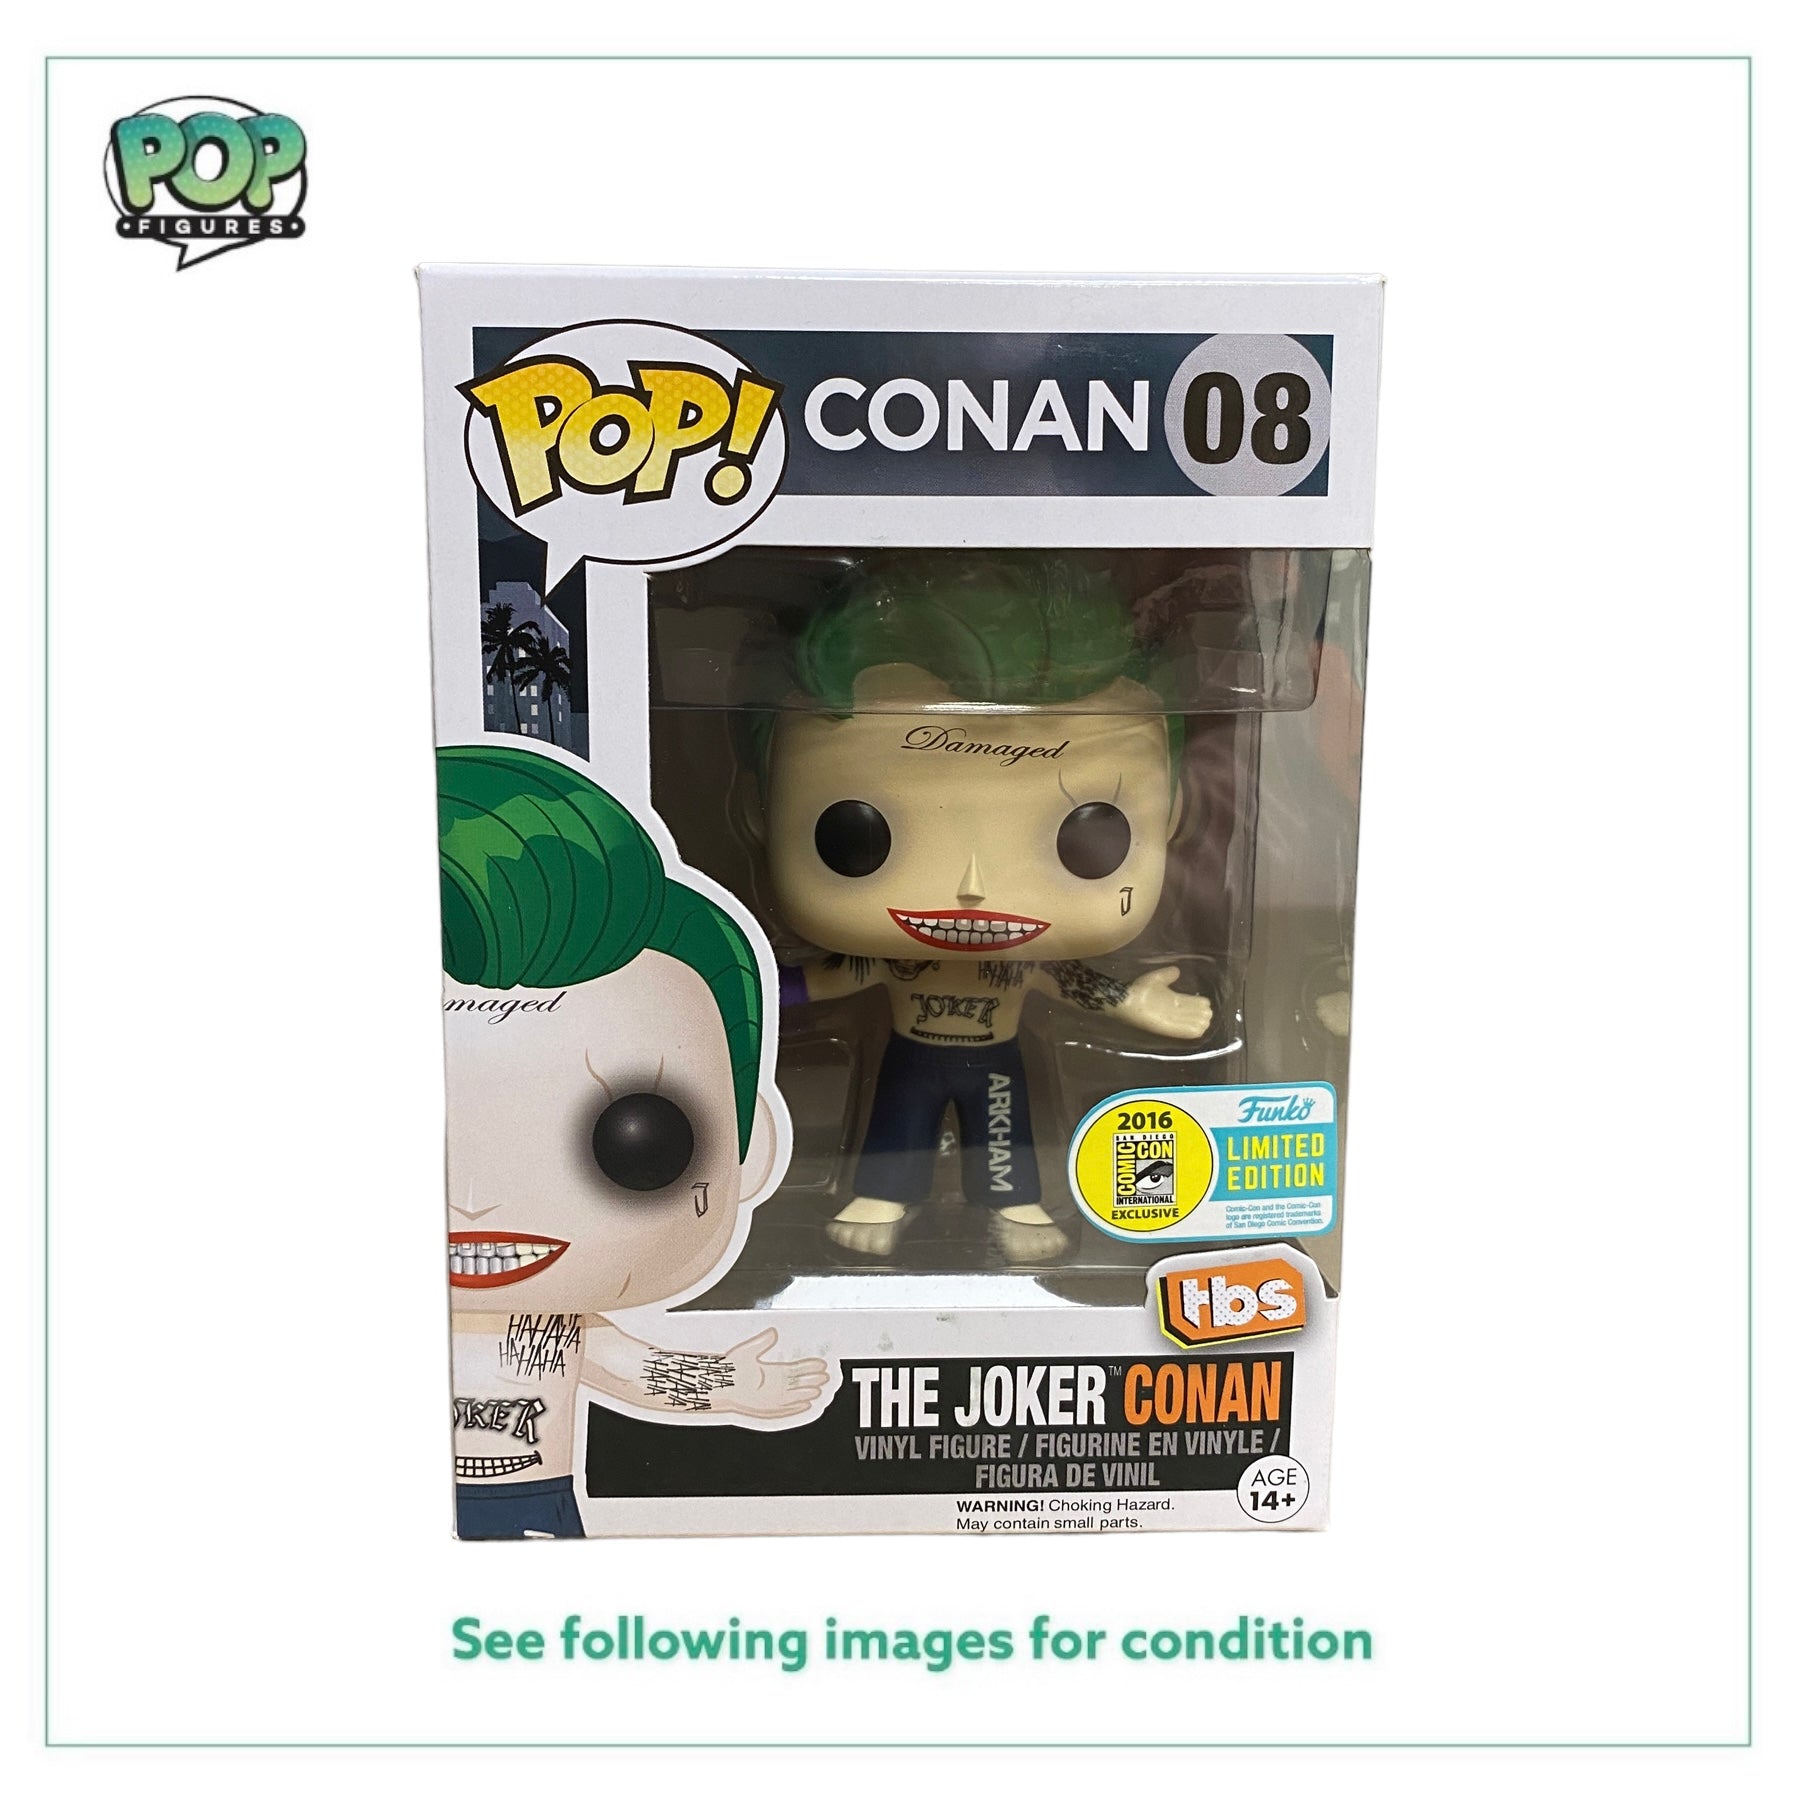 The Joker Conan #08 Funko Pop! - Conan - SDCC 2016 Exclusive - Condition 9/10